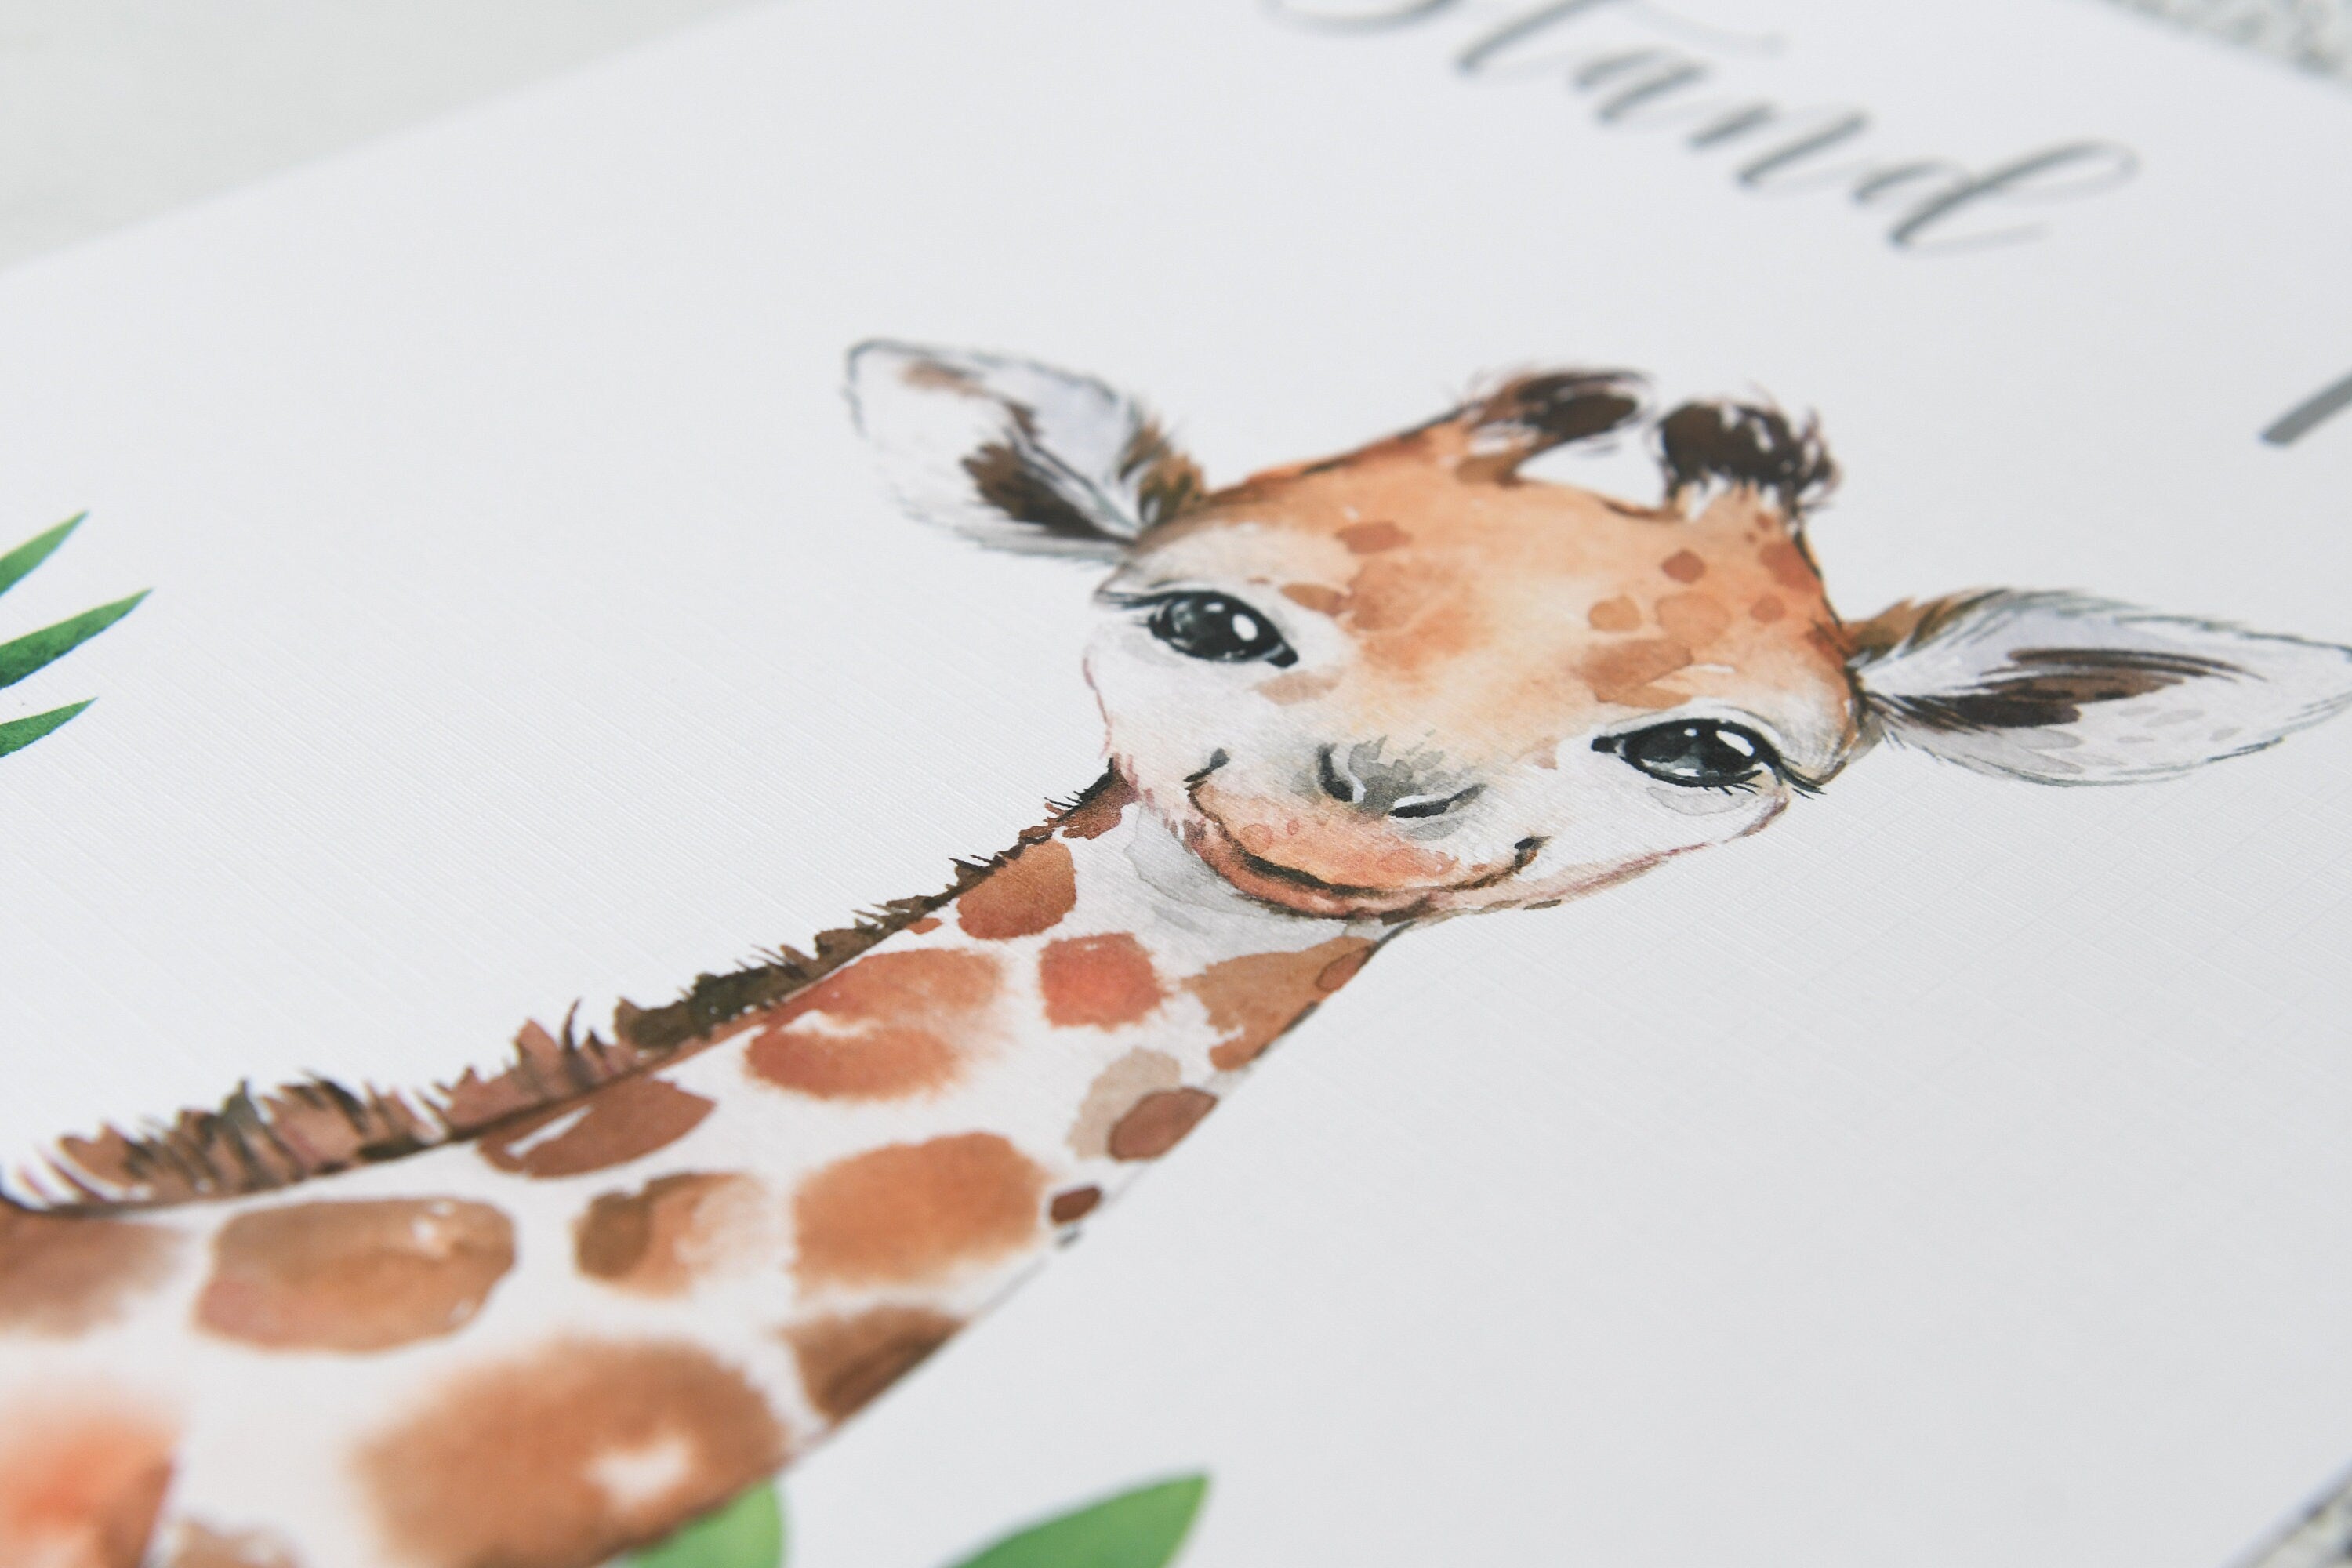 Jungle Animals Nursery Decor - Safari Nursery Prints - Nursery Set - Baby Wall Art - Nursery Decor - Jungle Theme - Elephant Giraffe Zebra